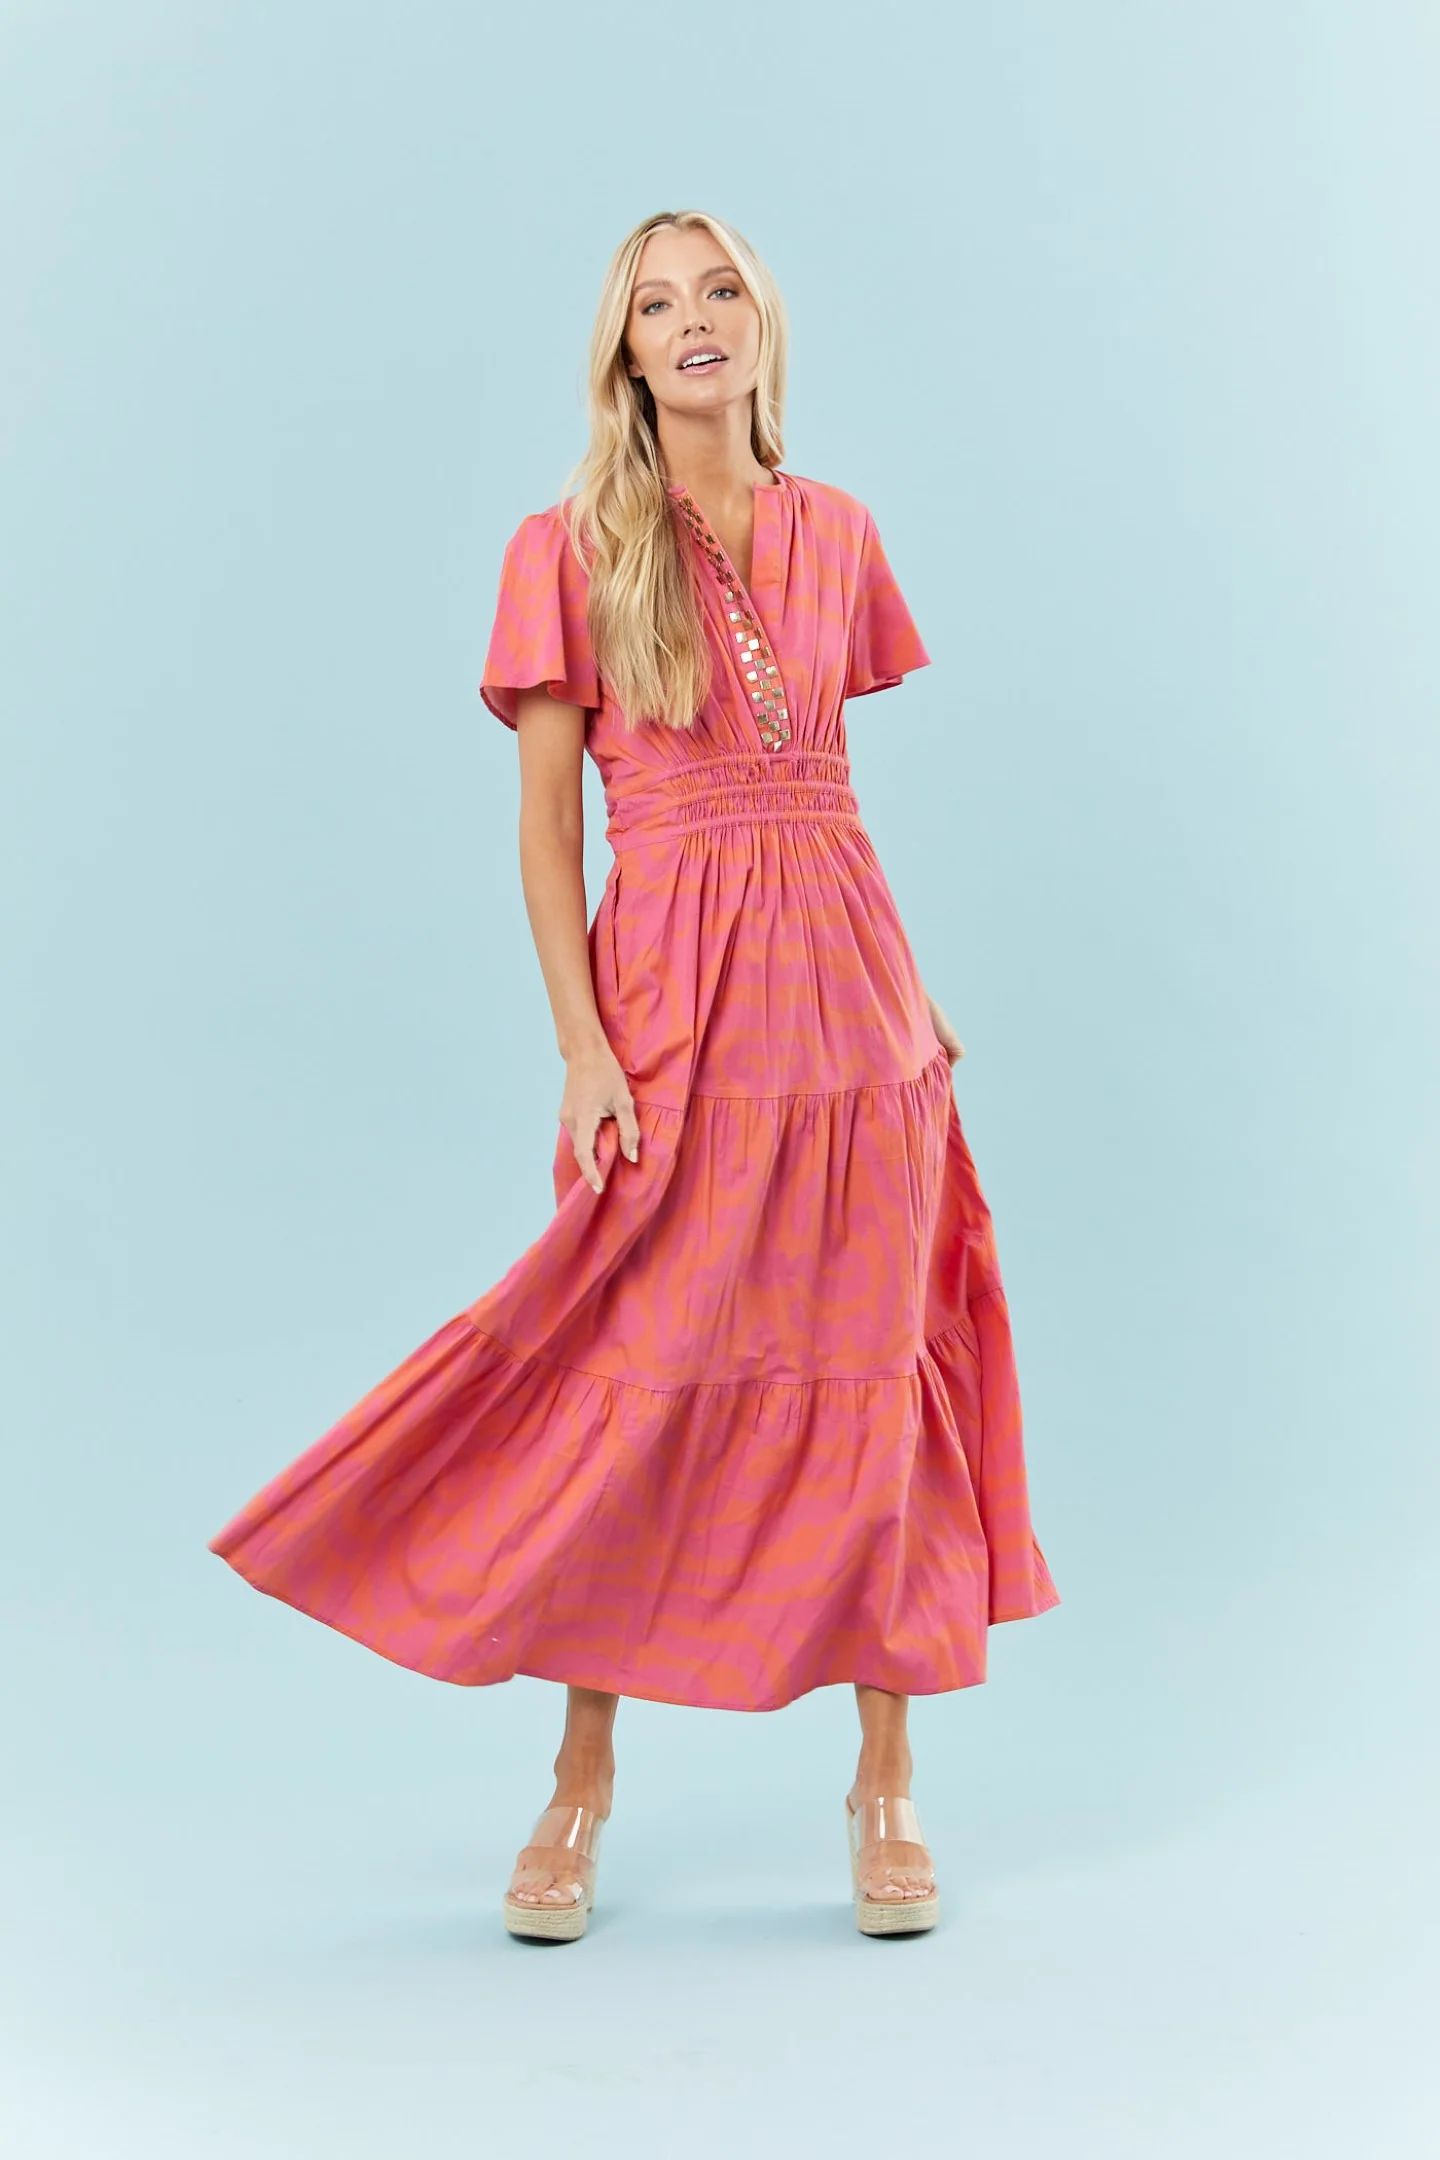 Sheridan French I Spring 2023 I Eloise Dress in Orange + Pink Tige | Sheridan French